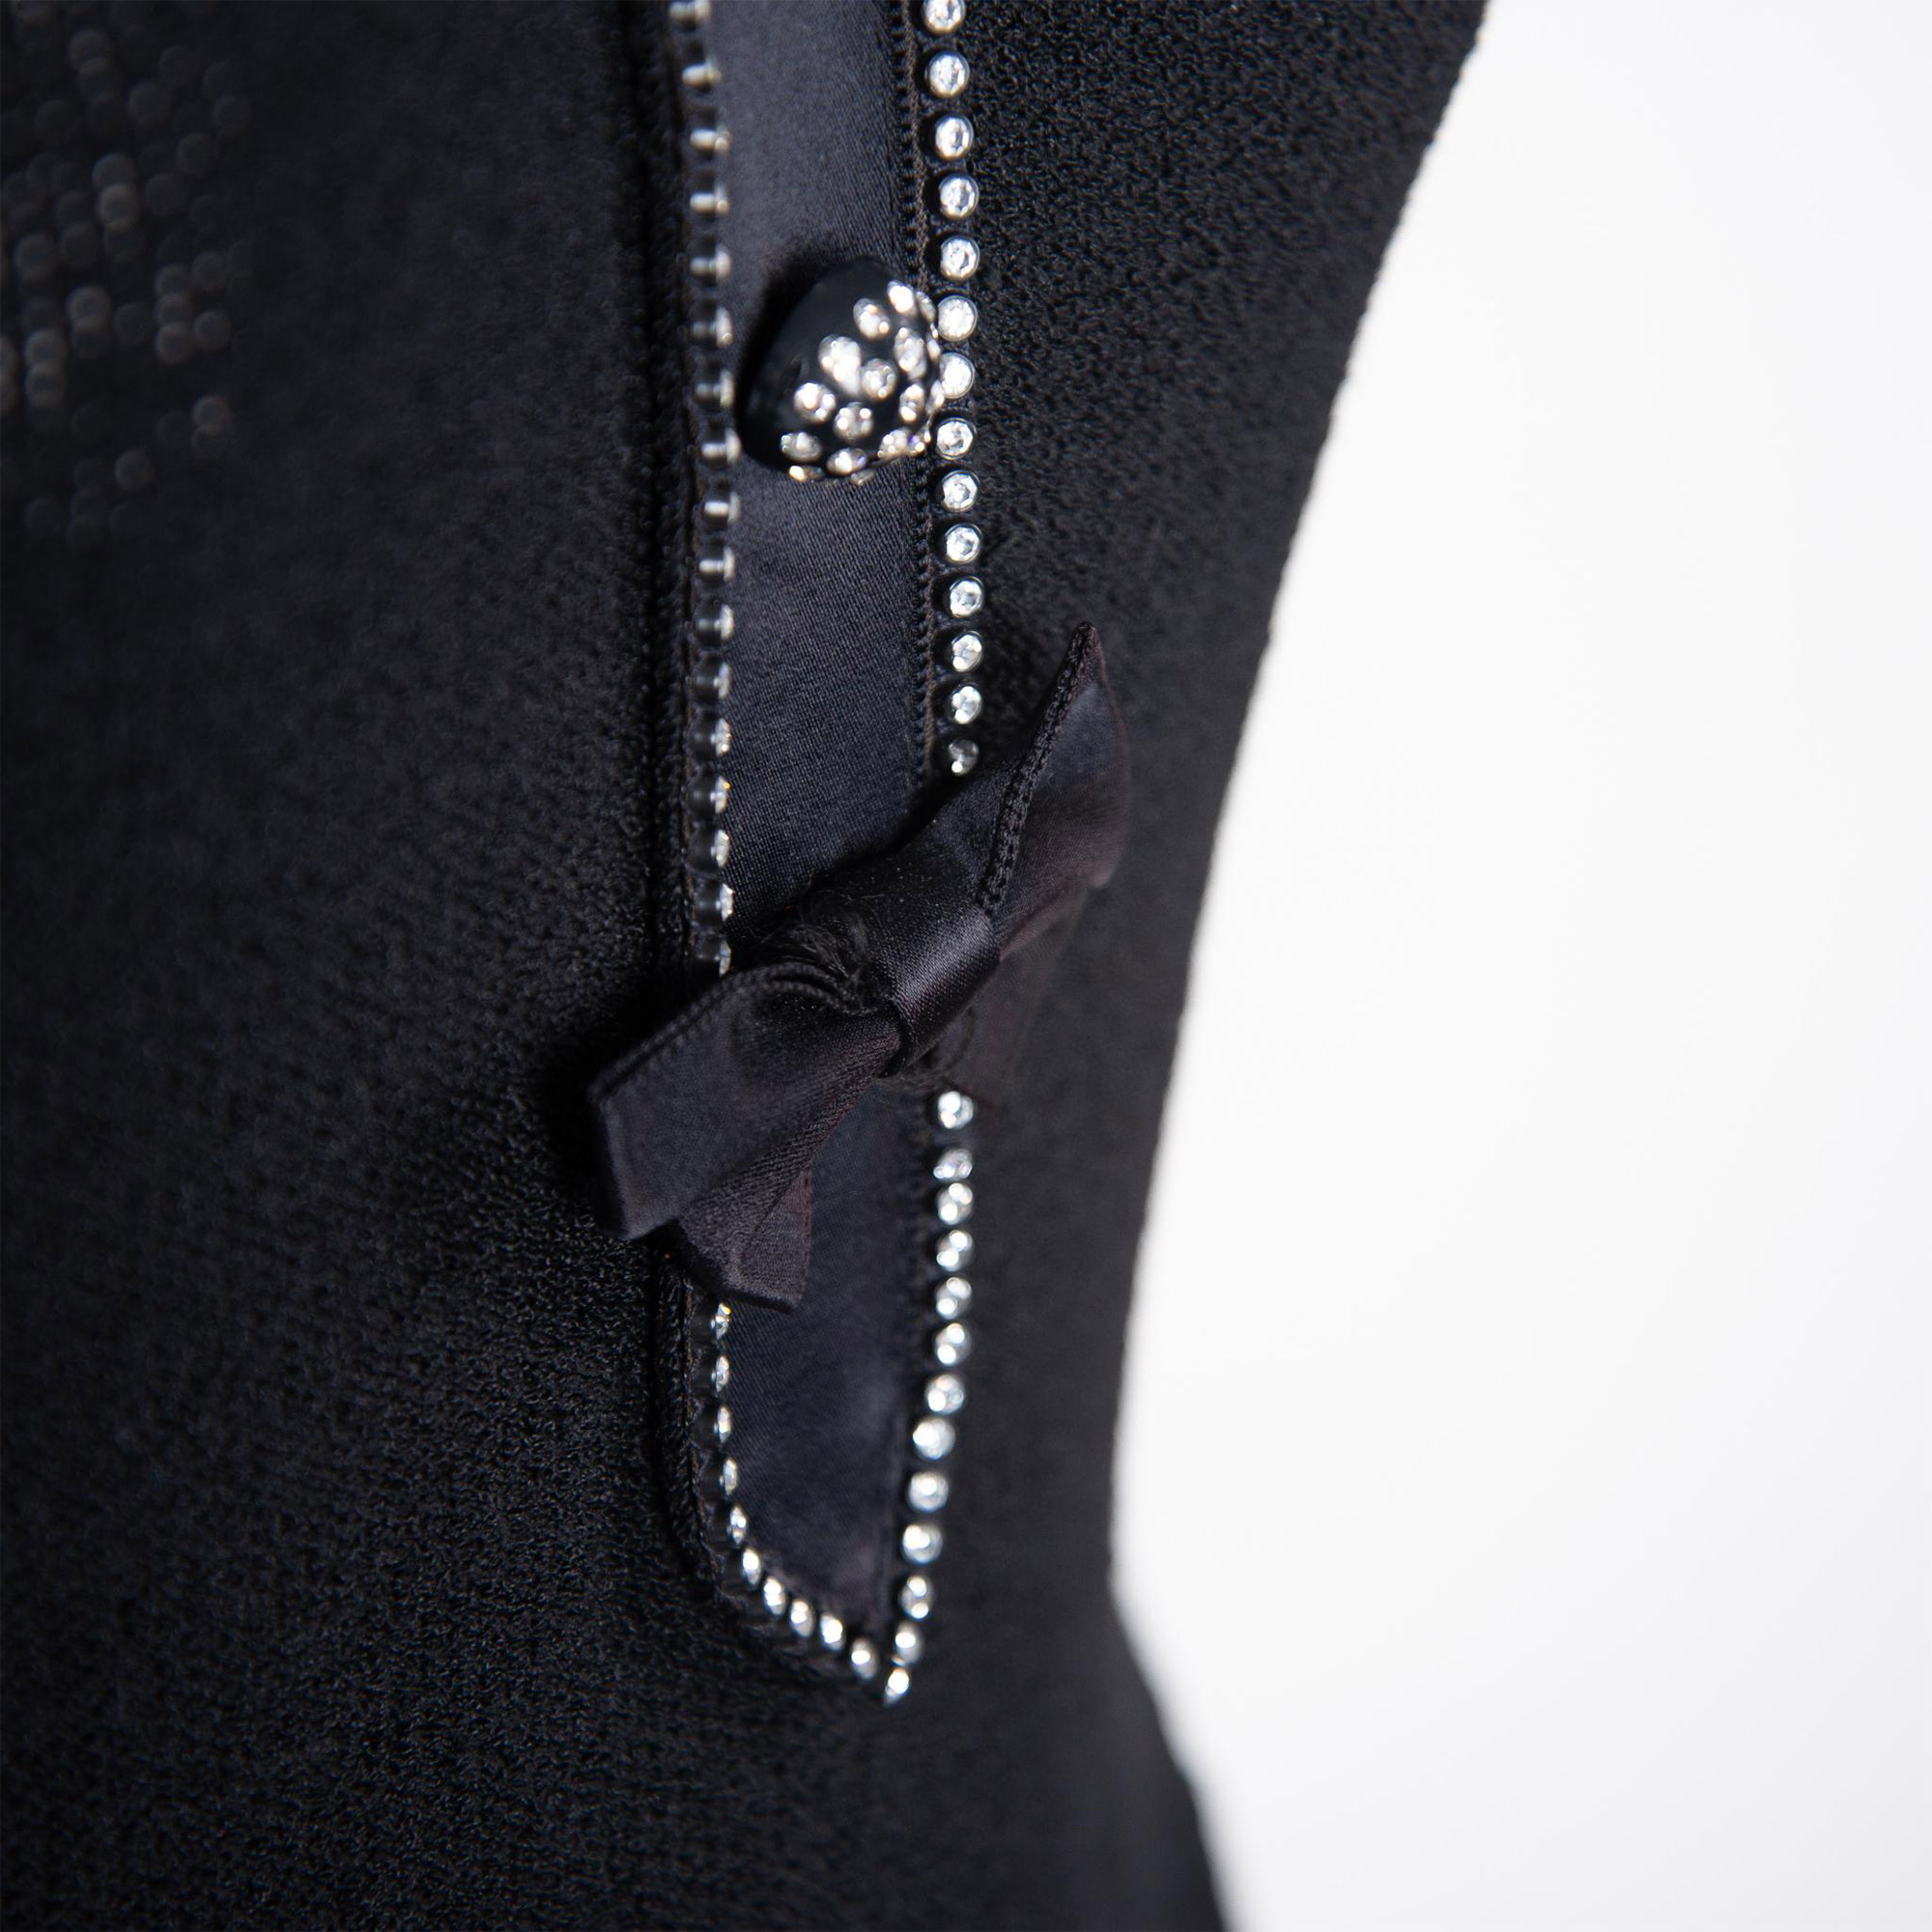 Adolfo for Neiman Marcus Rhinestone & Bow Knit Dress, Size Small - Image 3 of 8